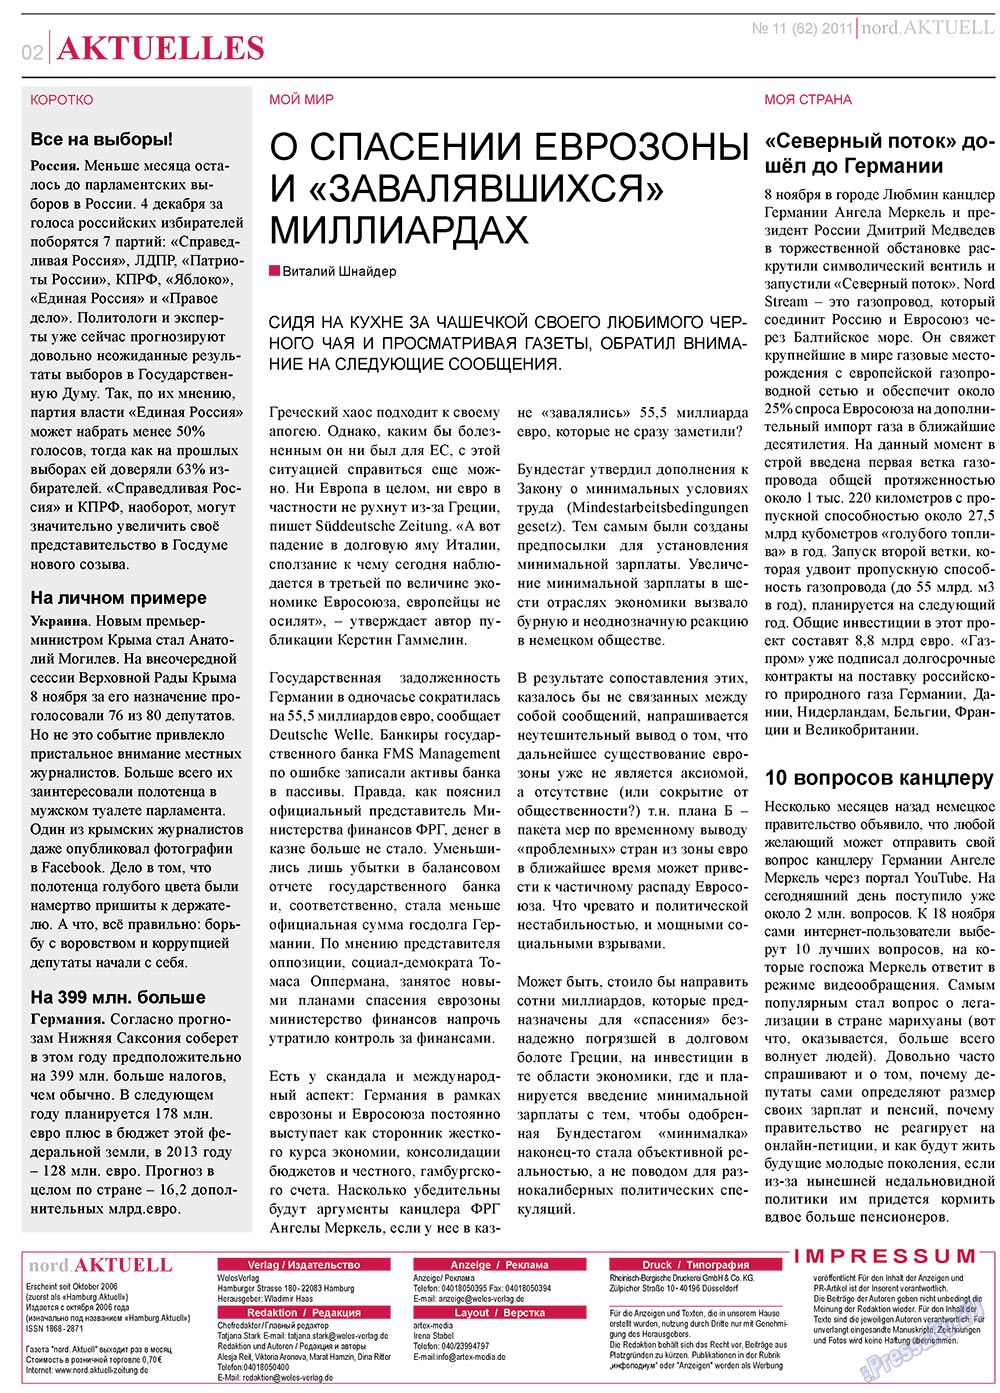 nord.Aktuell, газета. 2011 №11 стр.2